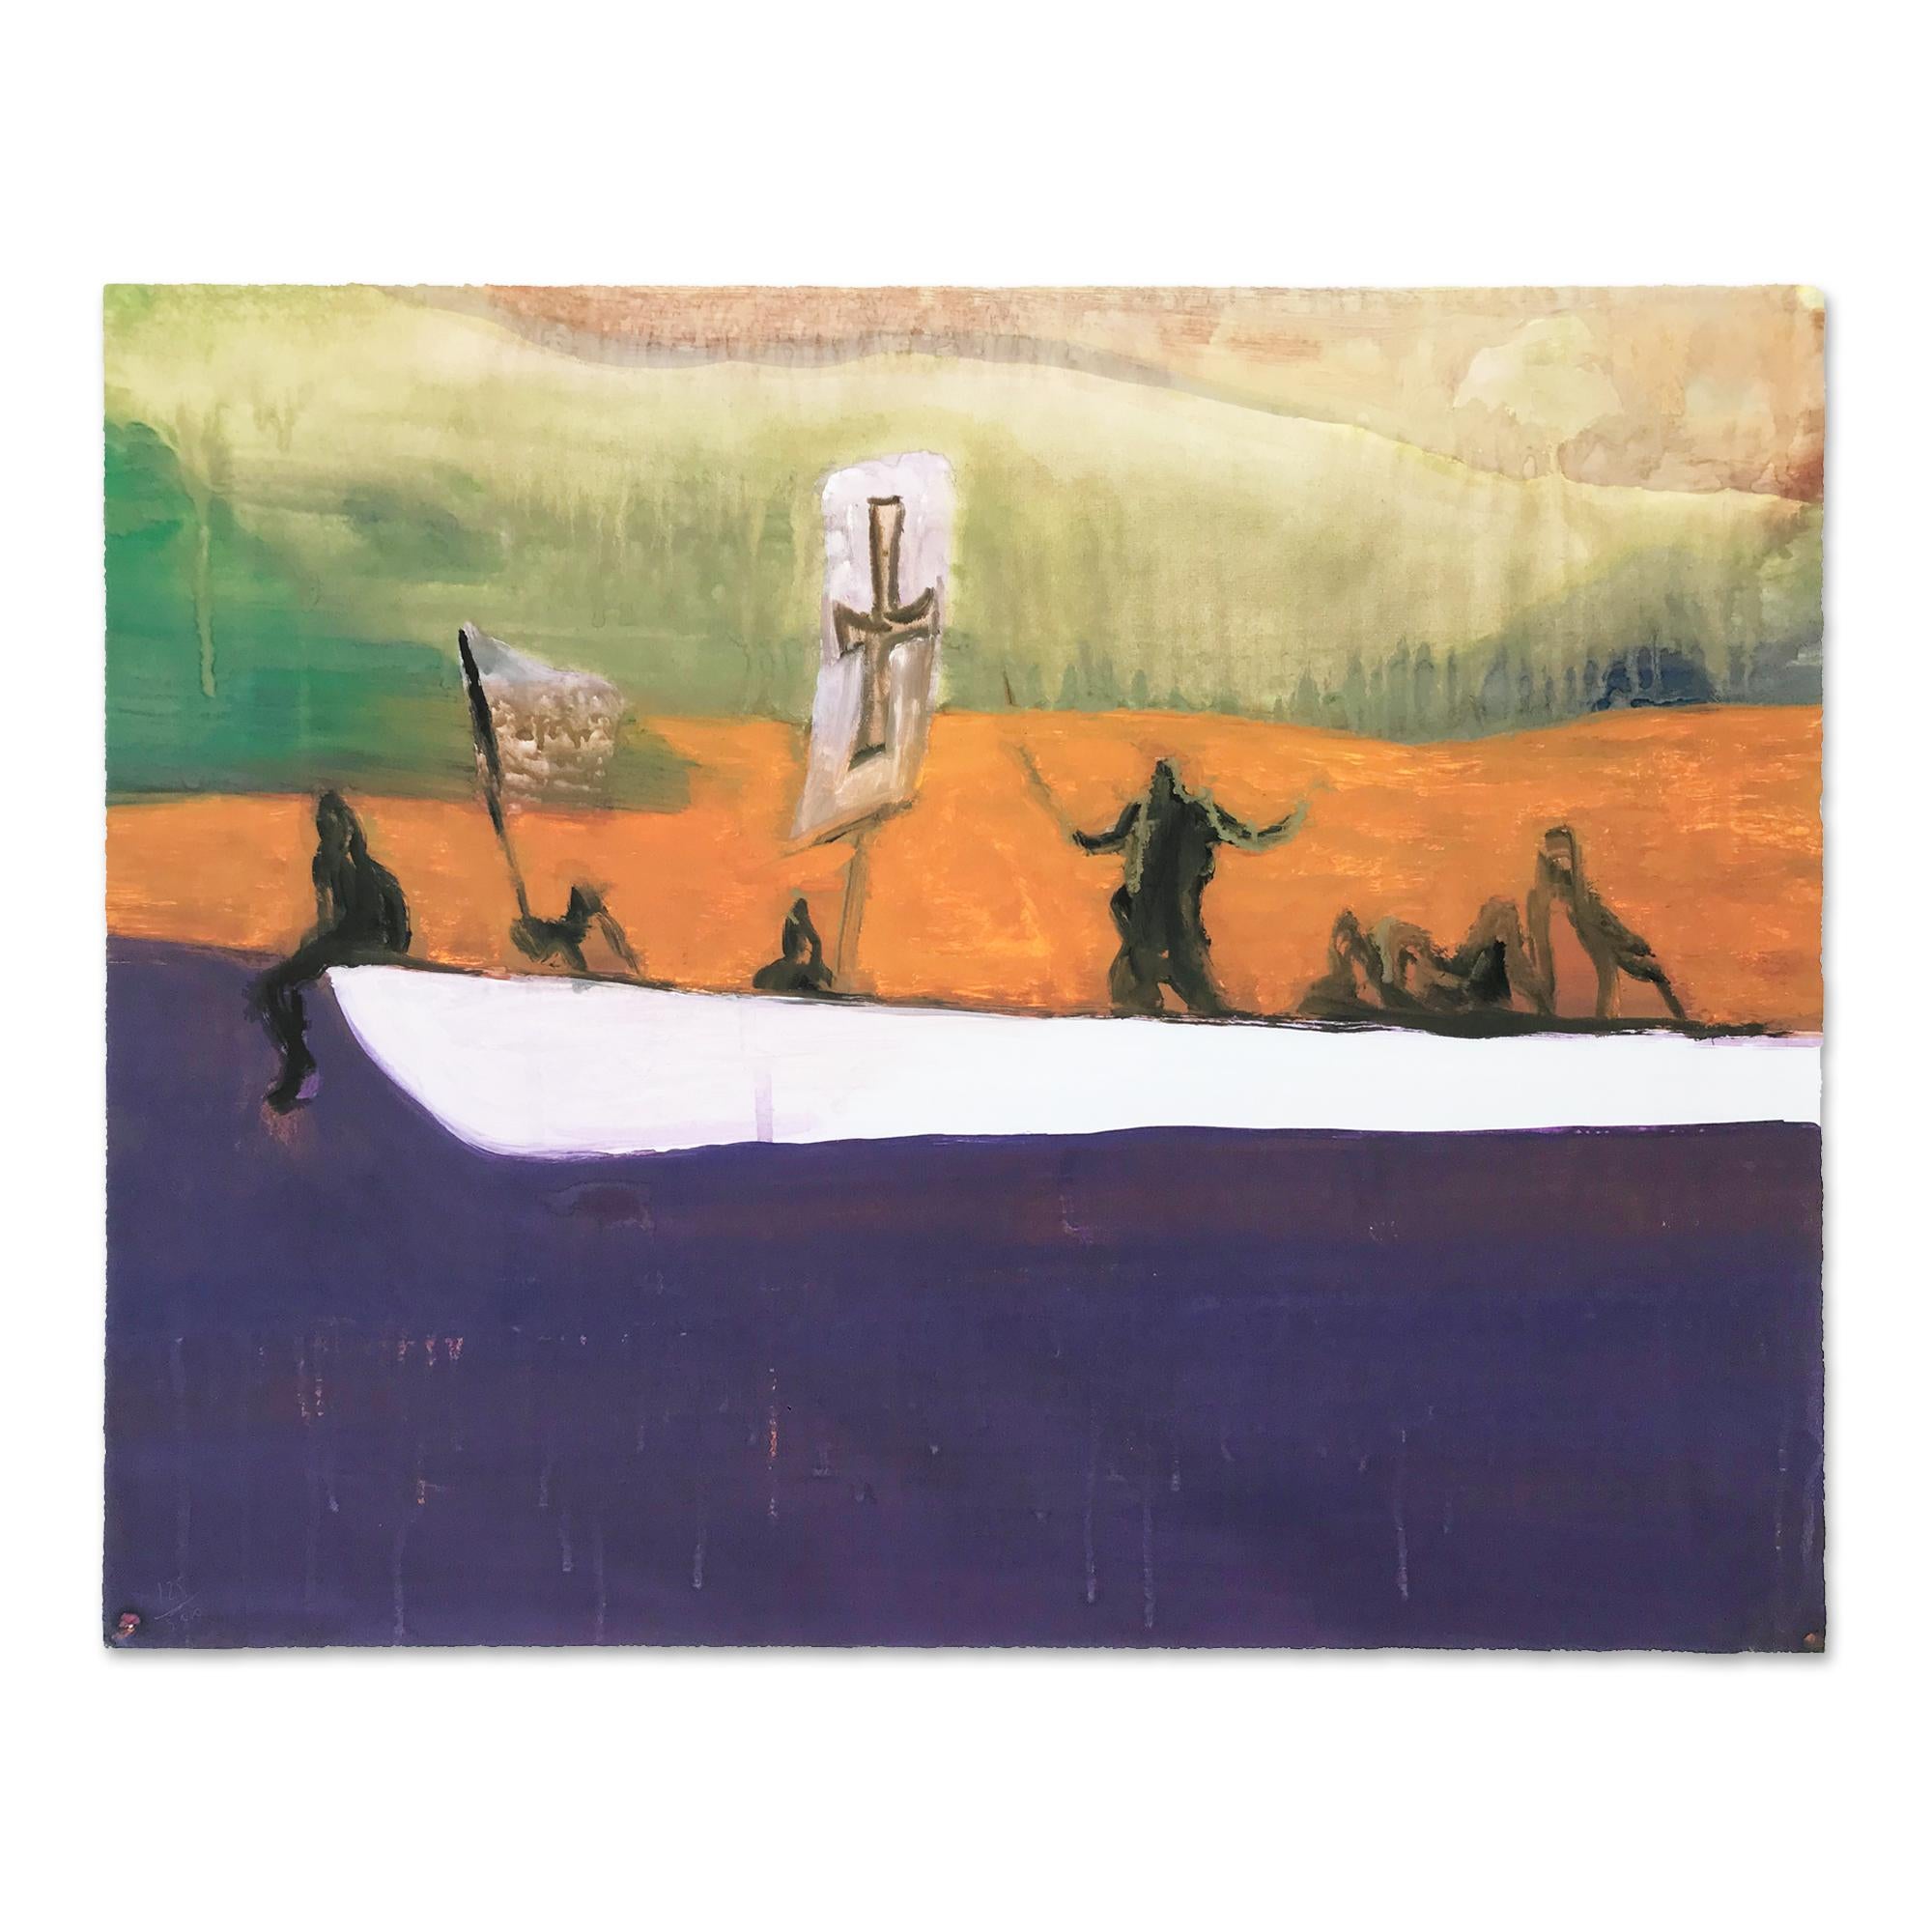 Peter Doig Abstract Print - Canoe, Contemporary Art, 21st Century, British Art